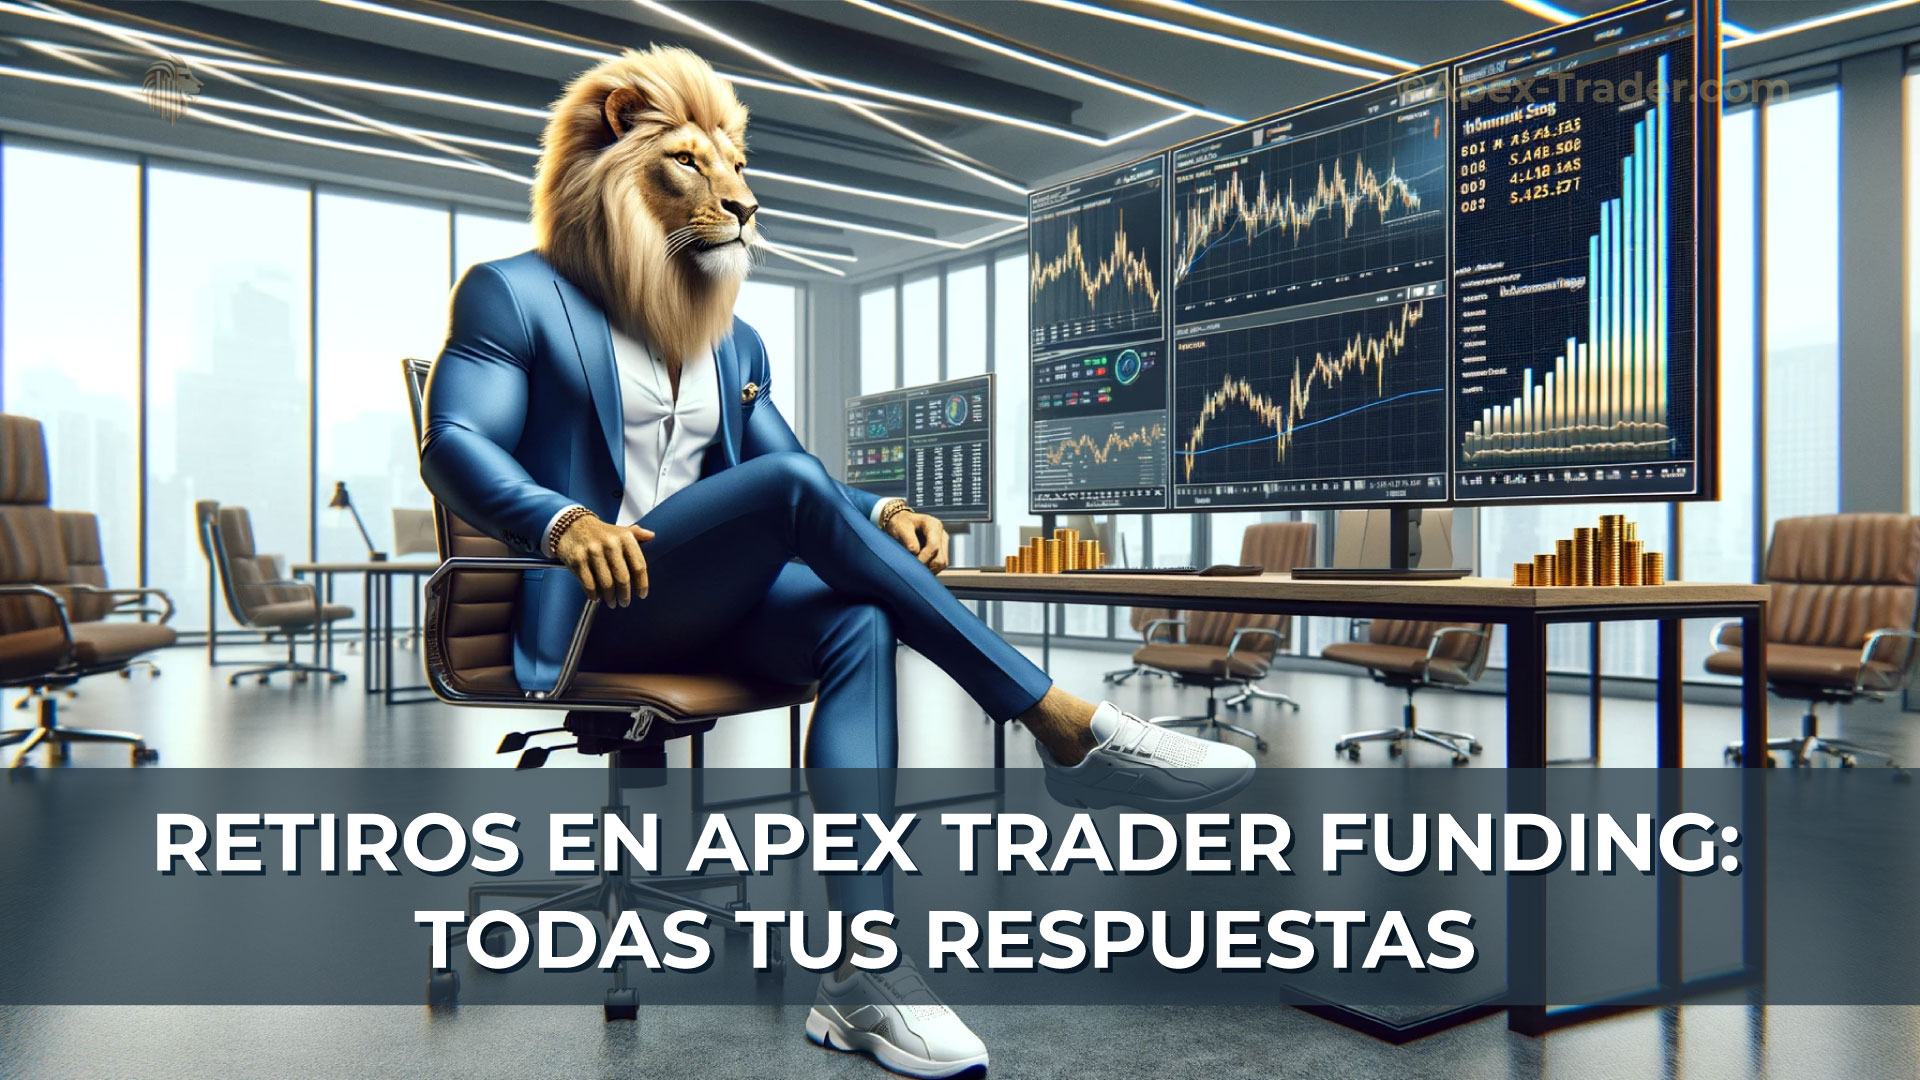 Retiros-en-Apex-Trader-Funding-Todas-Tus-Respuestas-On-Apex-Trader-Website